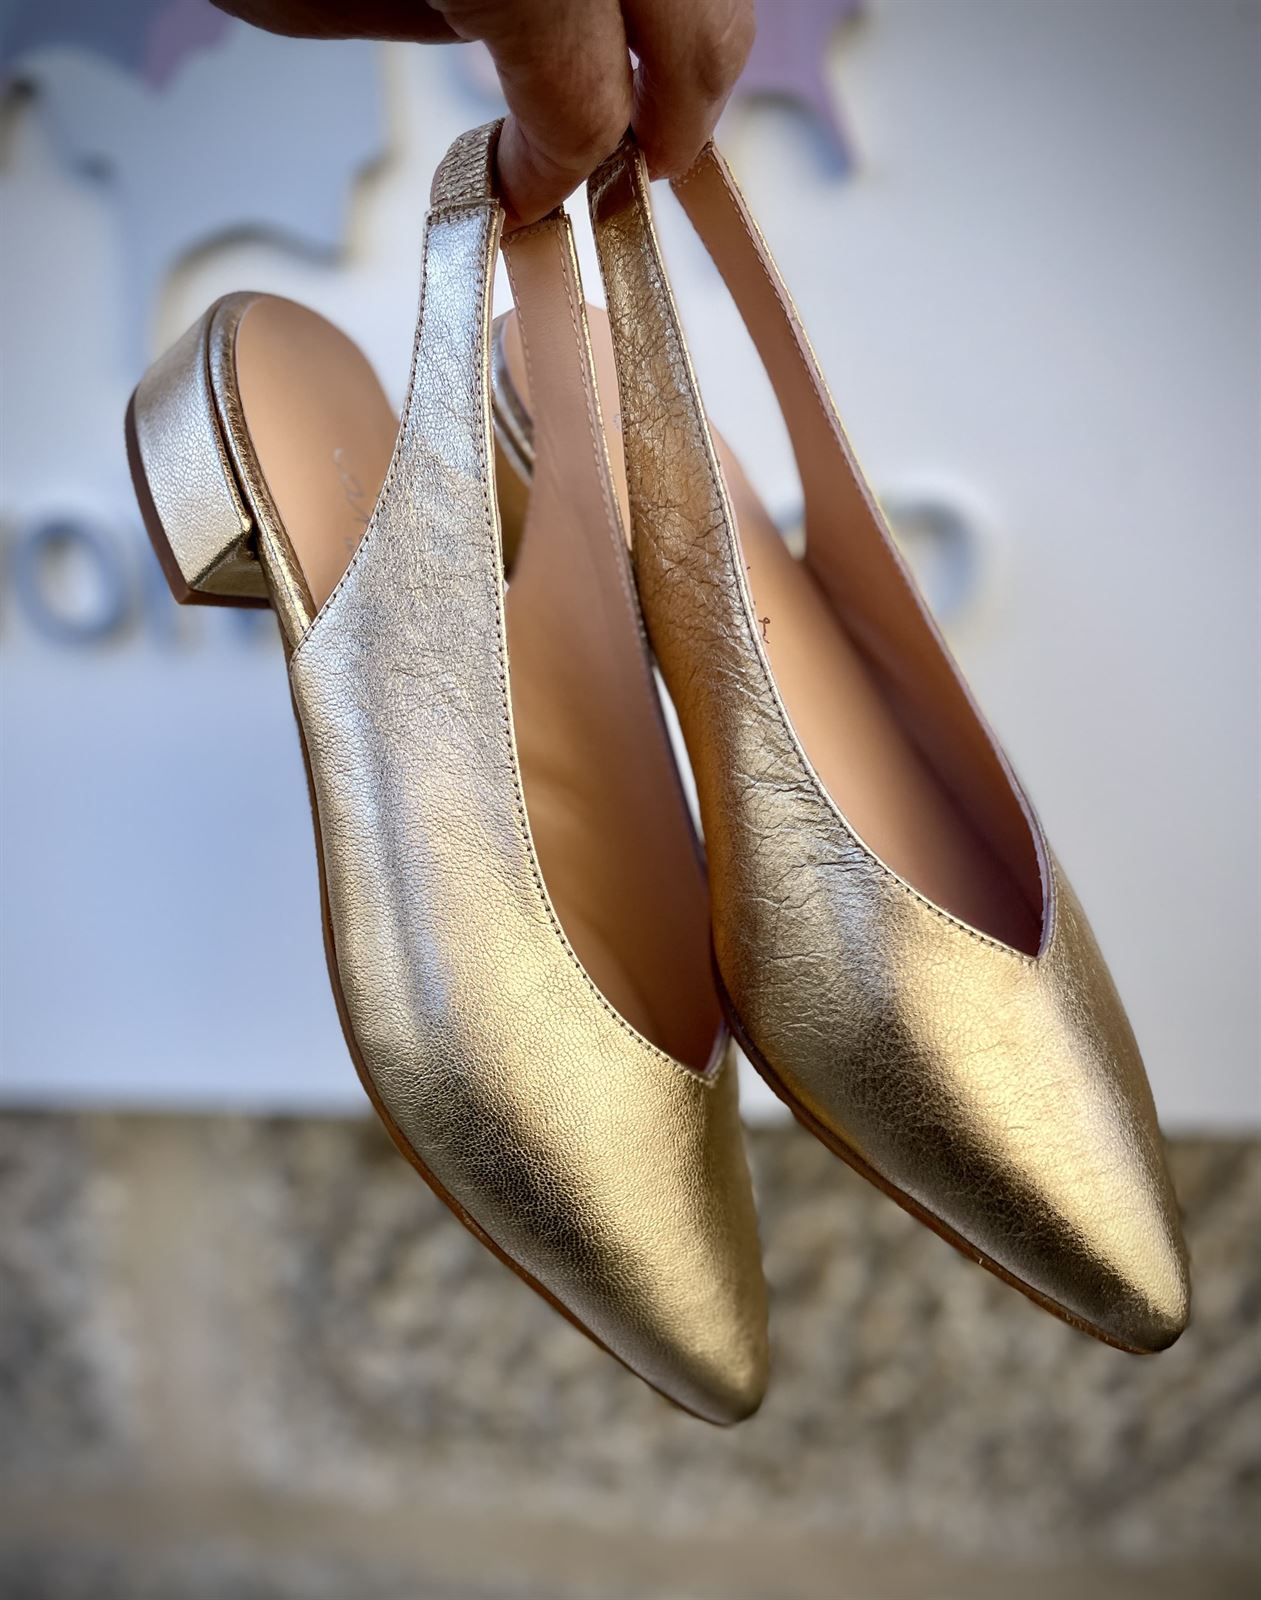 Baailarina zapato Candelitas metalizado champagne - Imagen 4